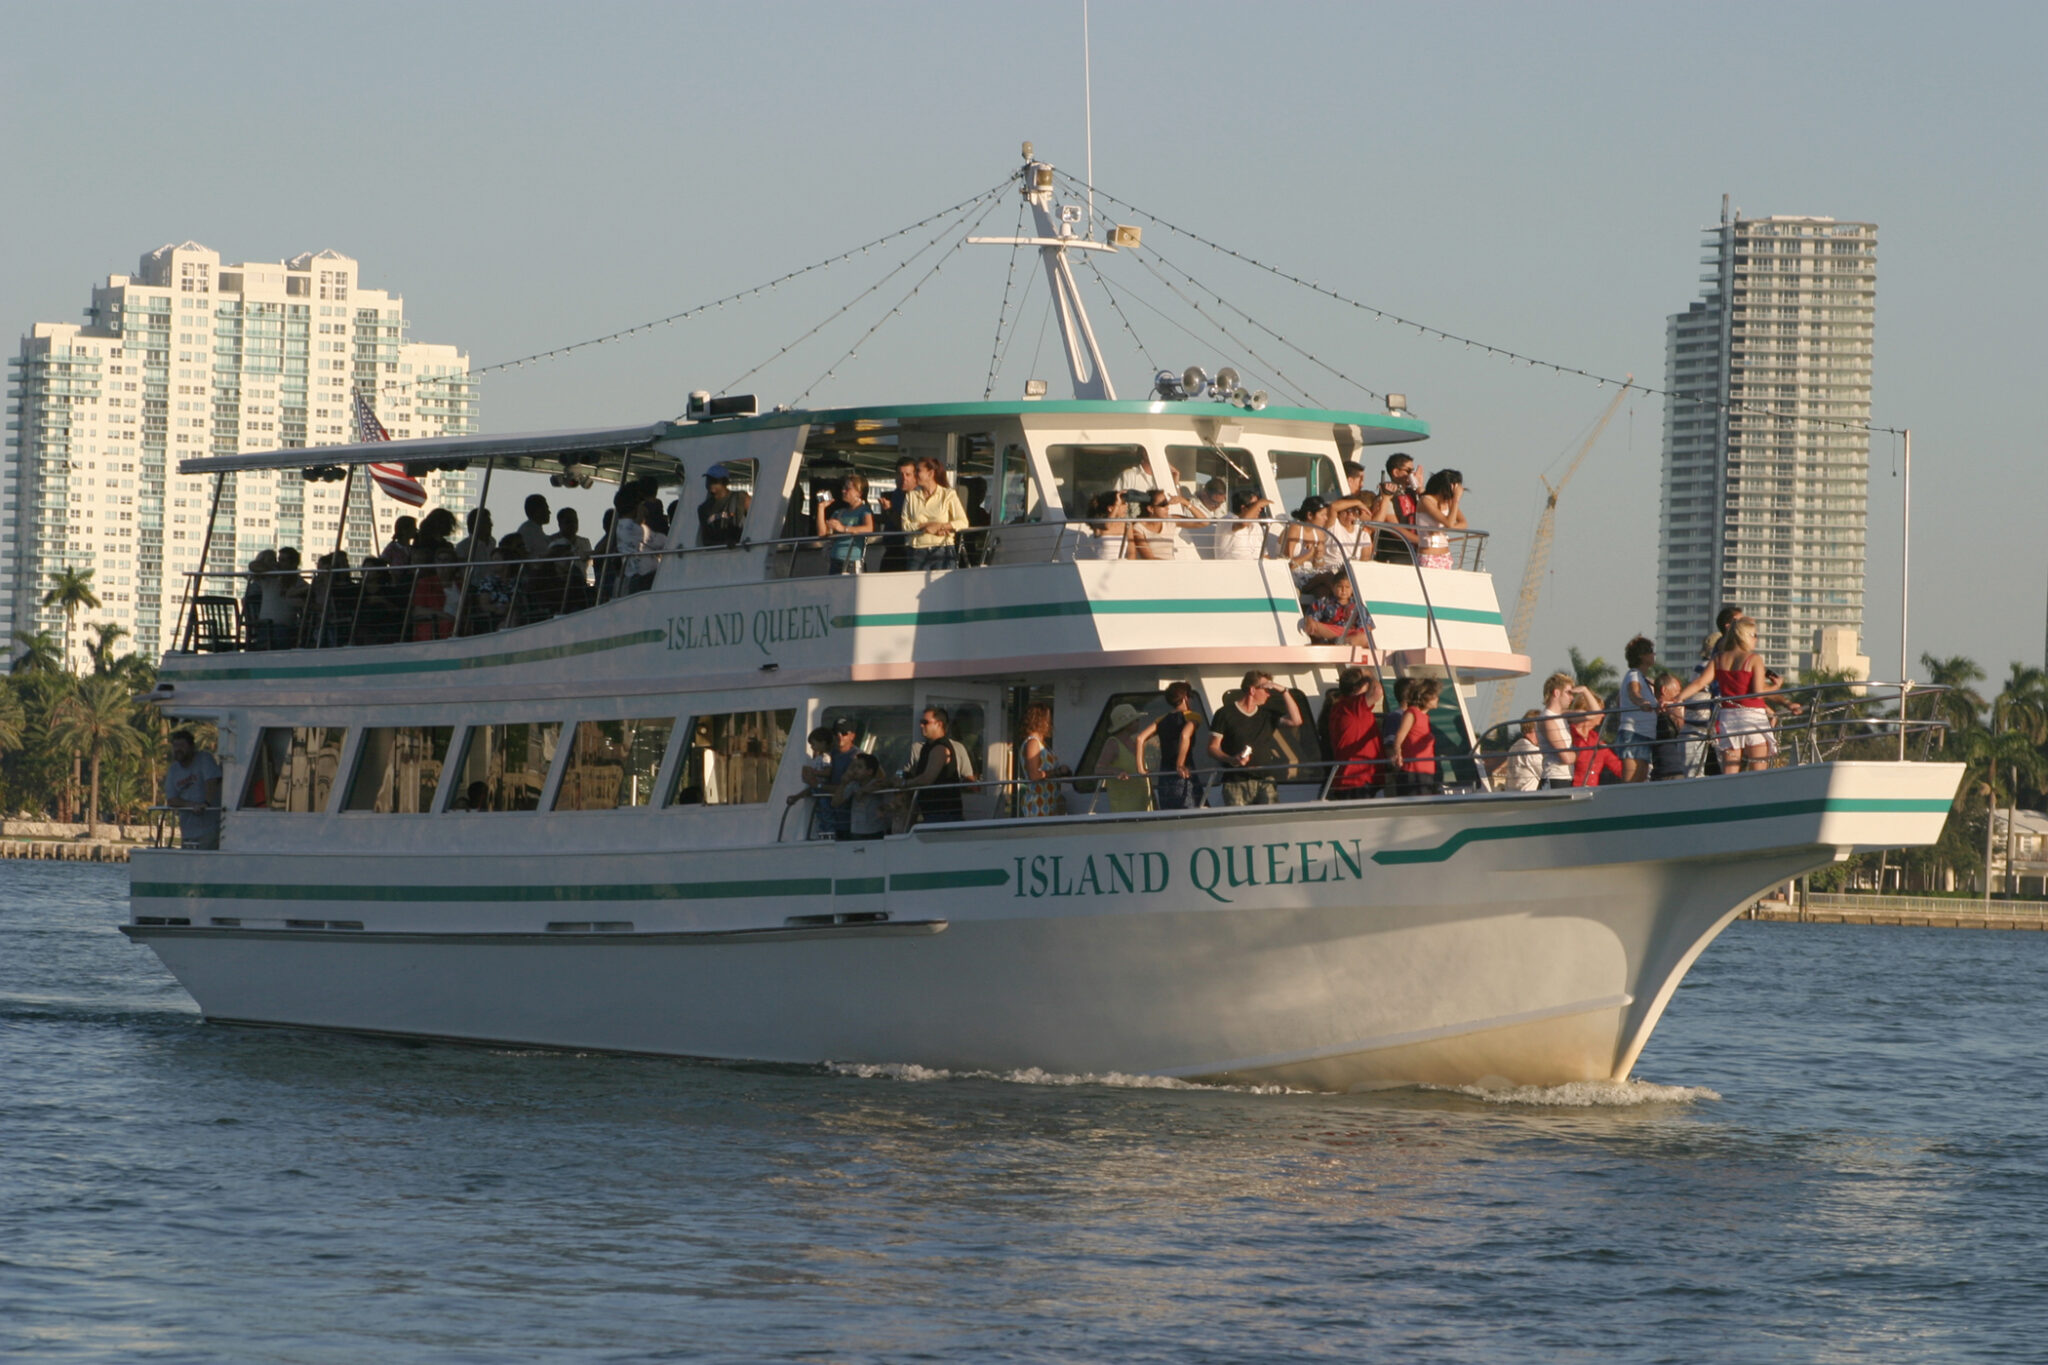 Queen island. Miami Boat Tour. Прогулка водное такси коллаж. Boaтship Island Queen. Водные прогулки по Витебску.